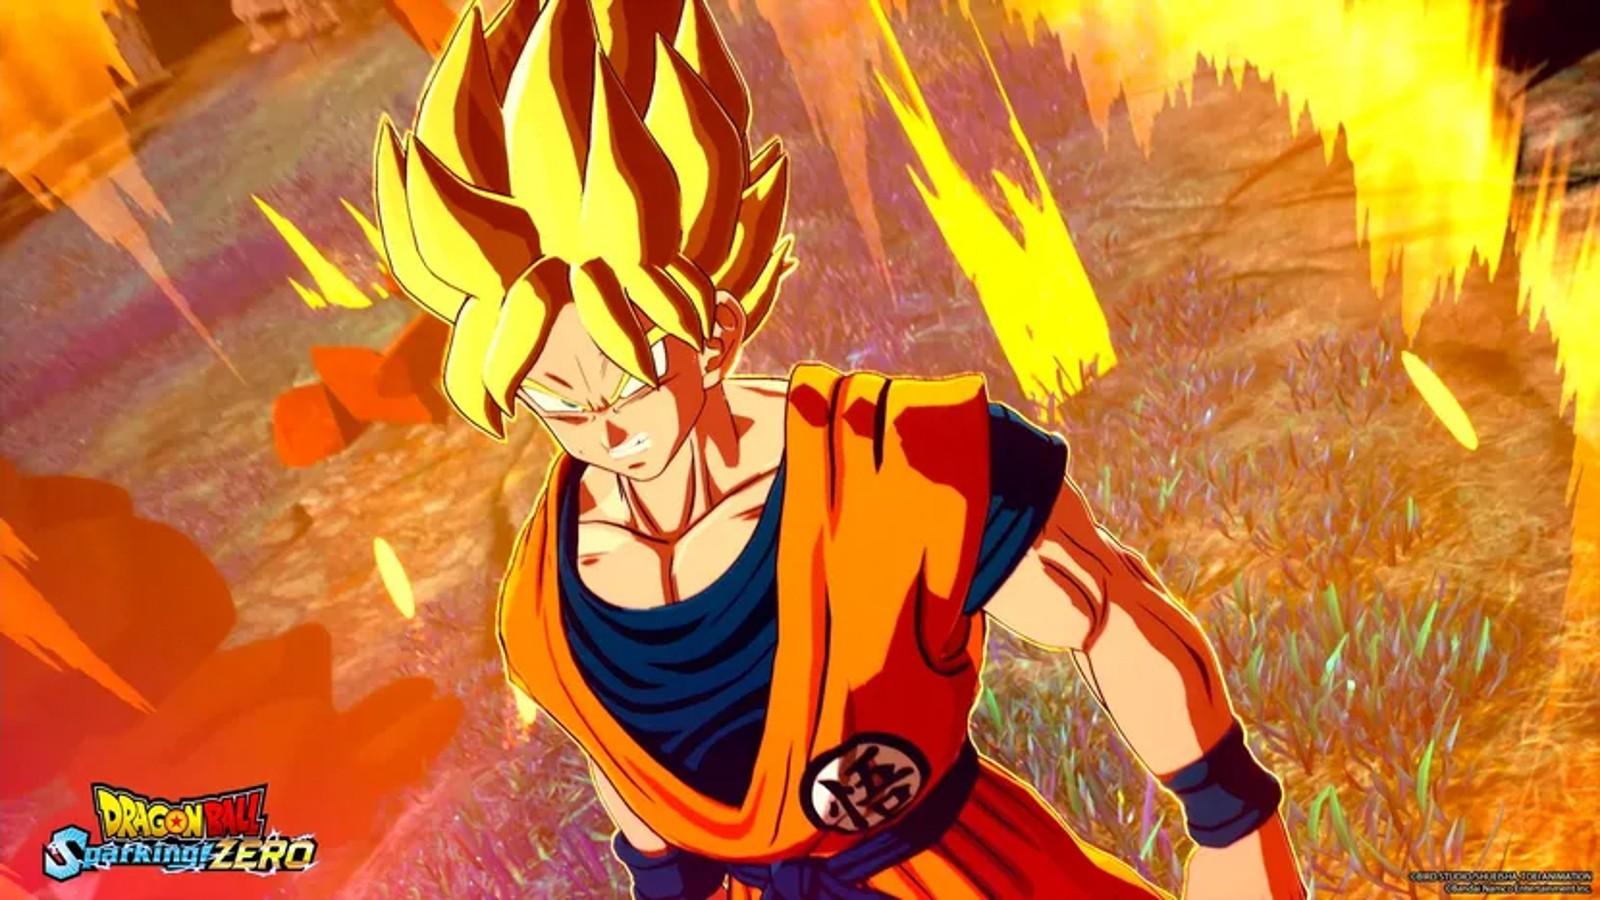 An image of Goku in Dragon Ball Sparking Zero.